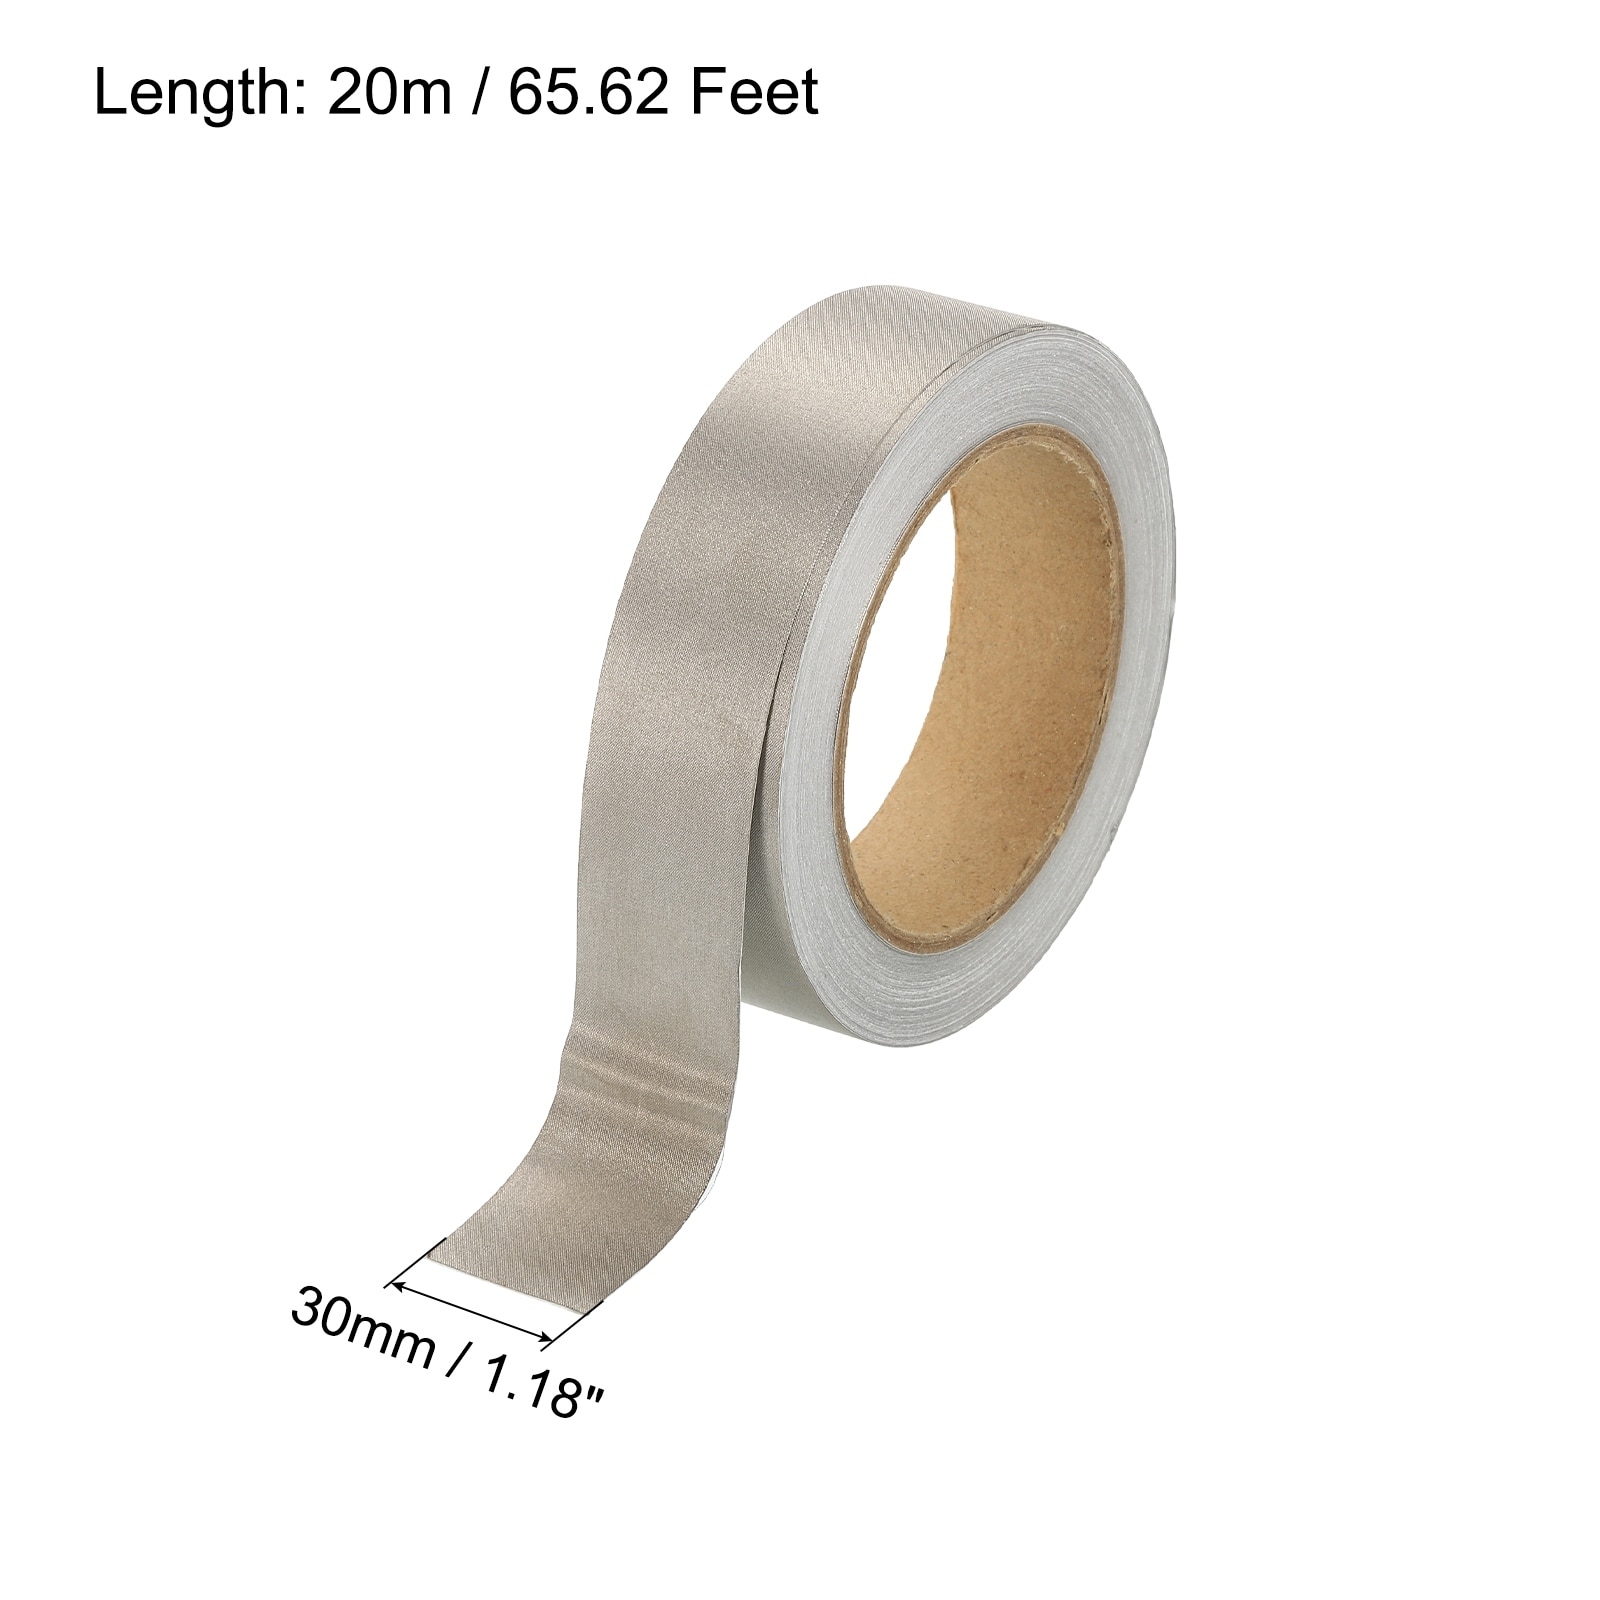 Faraday Tape 1.18x65.62 Feet Conductive Cloth Fabric Adhesive Tape -  Silver Gray - Bed Bath & Beyond - 37829728